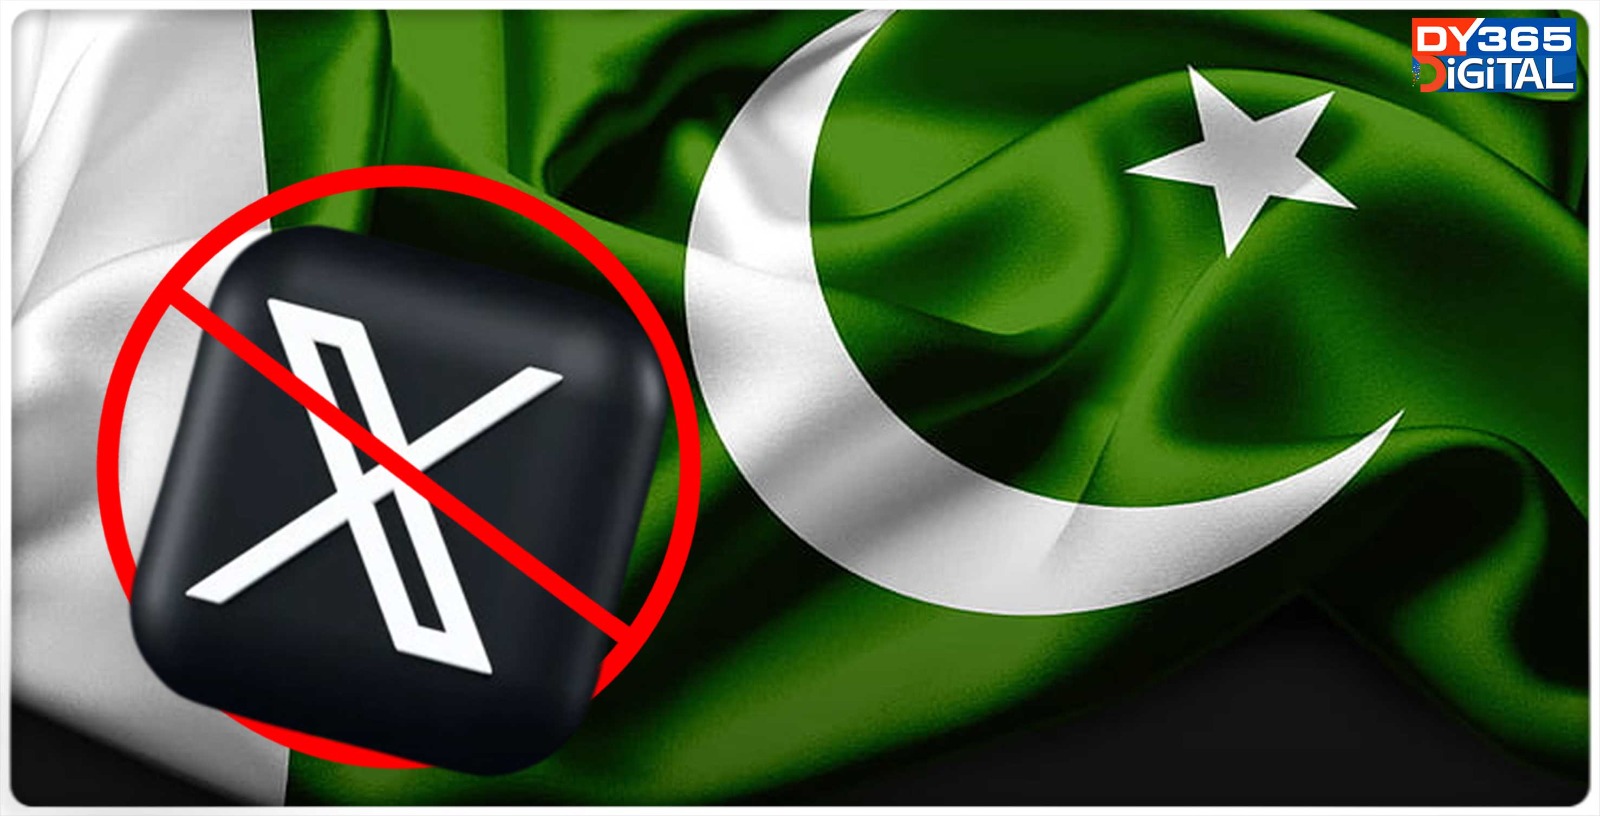 pakistan-blocks-social-media-platform-x-over-misuse-concerns-